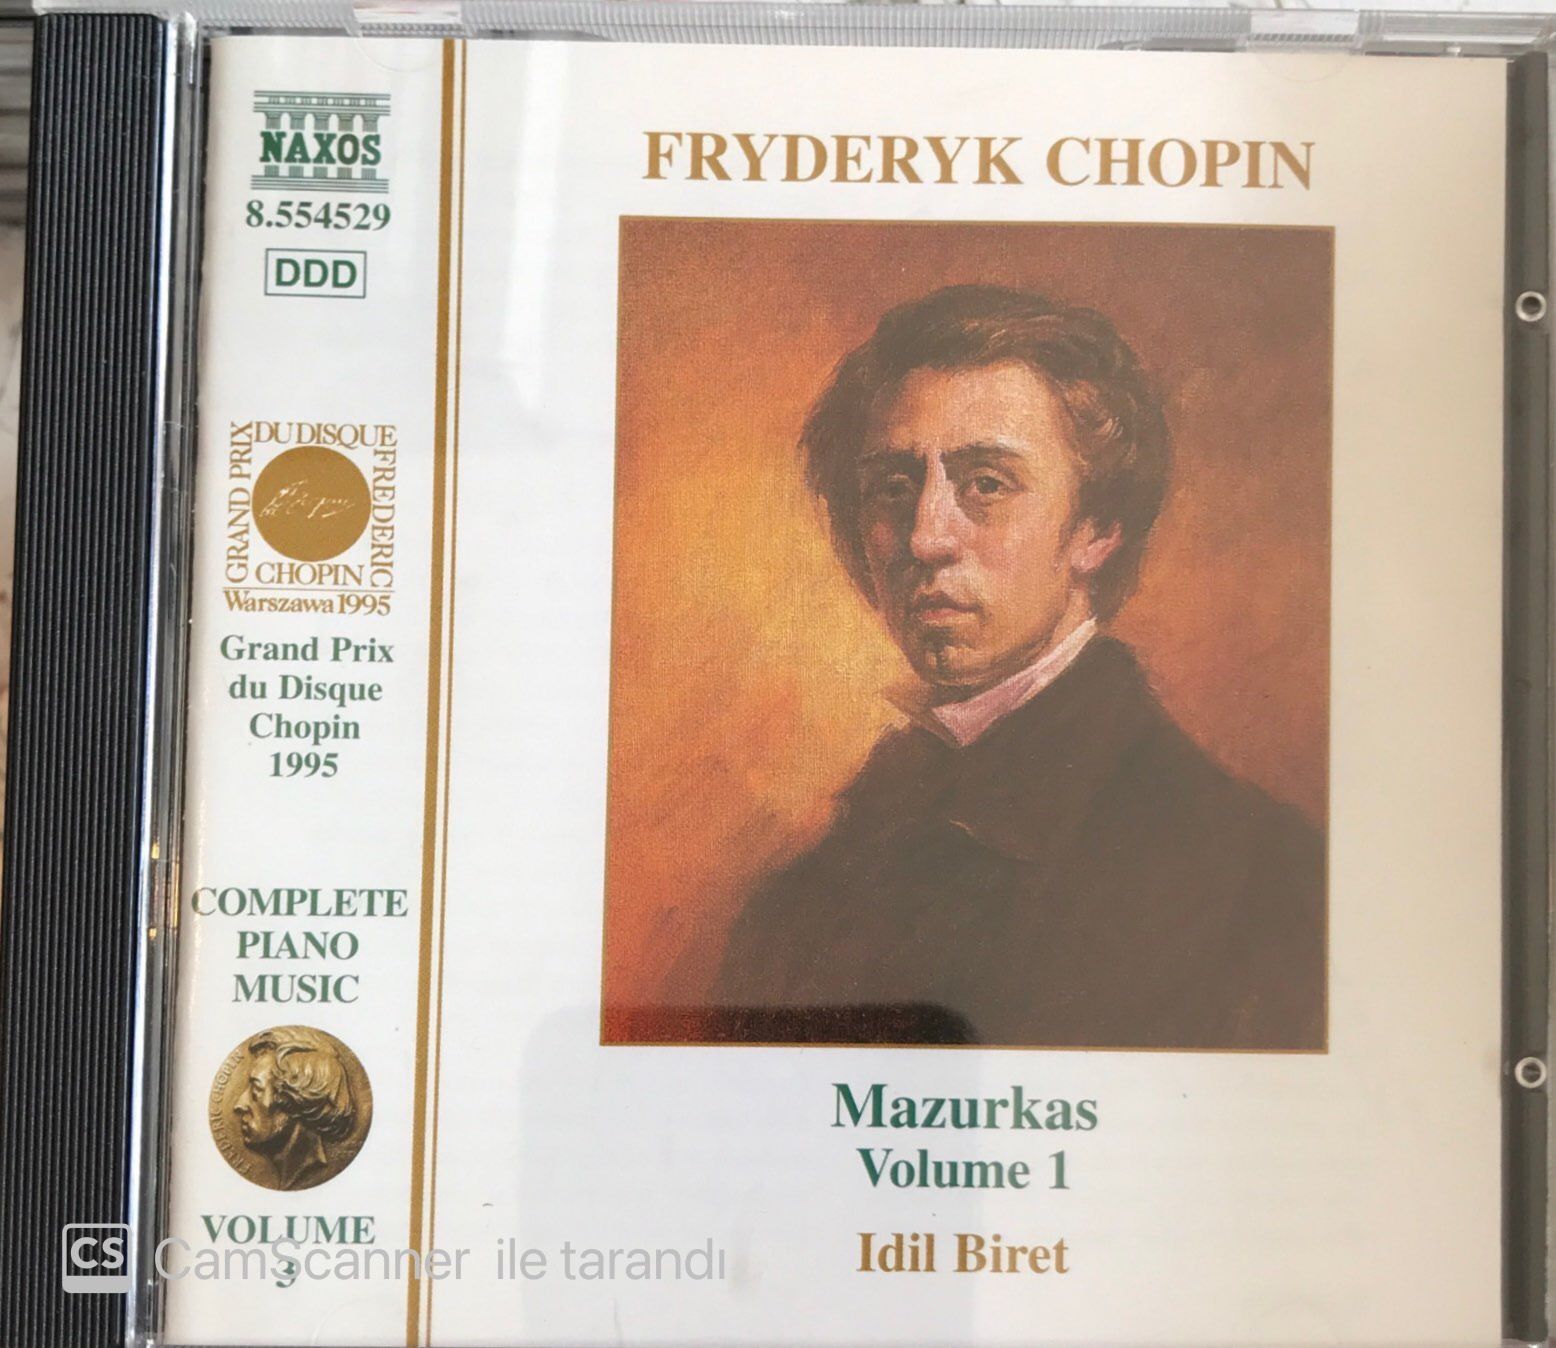 Fryderyk Chopin Mazurkas Volume 1 İdil Biret Volume 3 CD